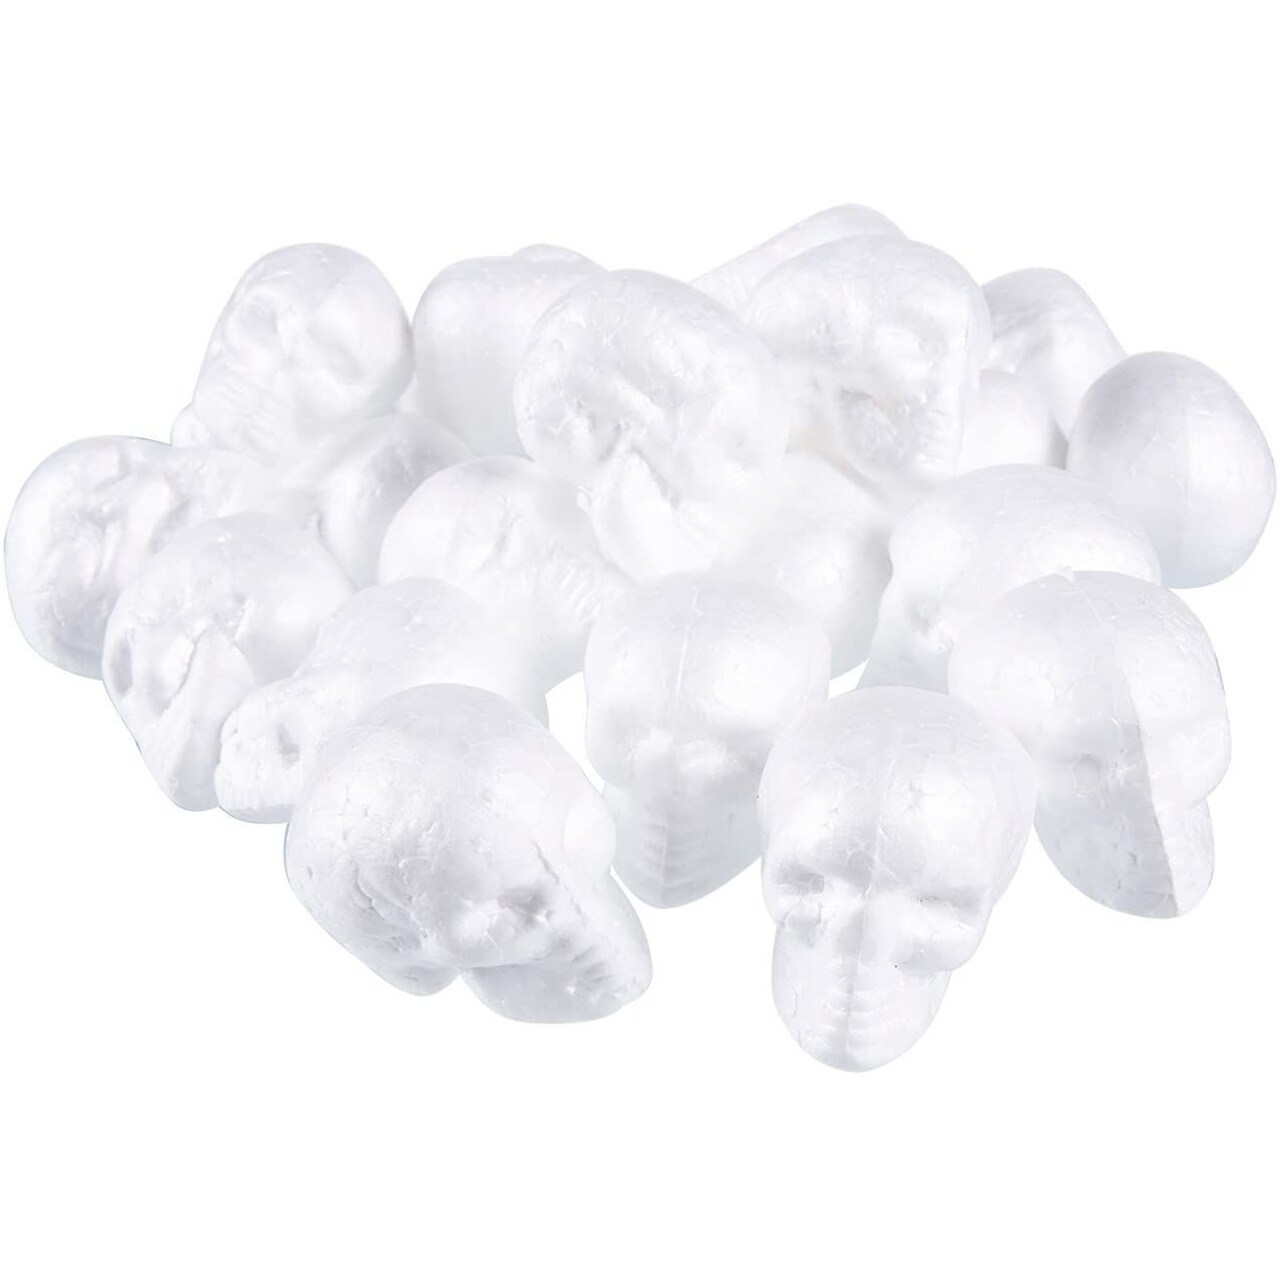 Foam Skulls for DIY Halloween Crafts, Decorations (White, 24 Pack)